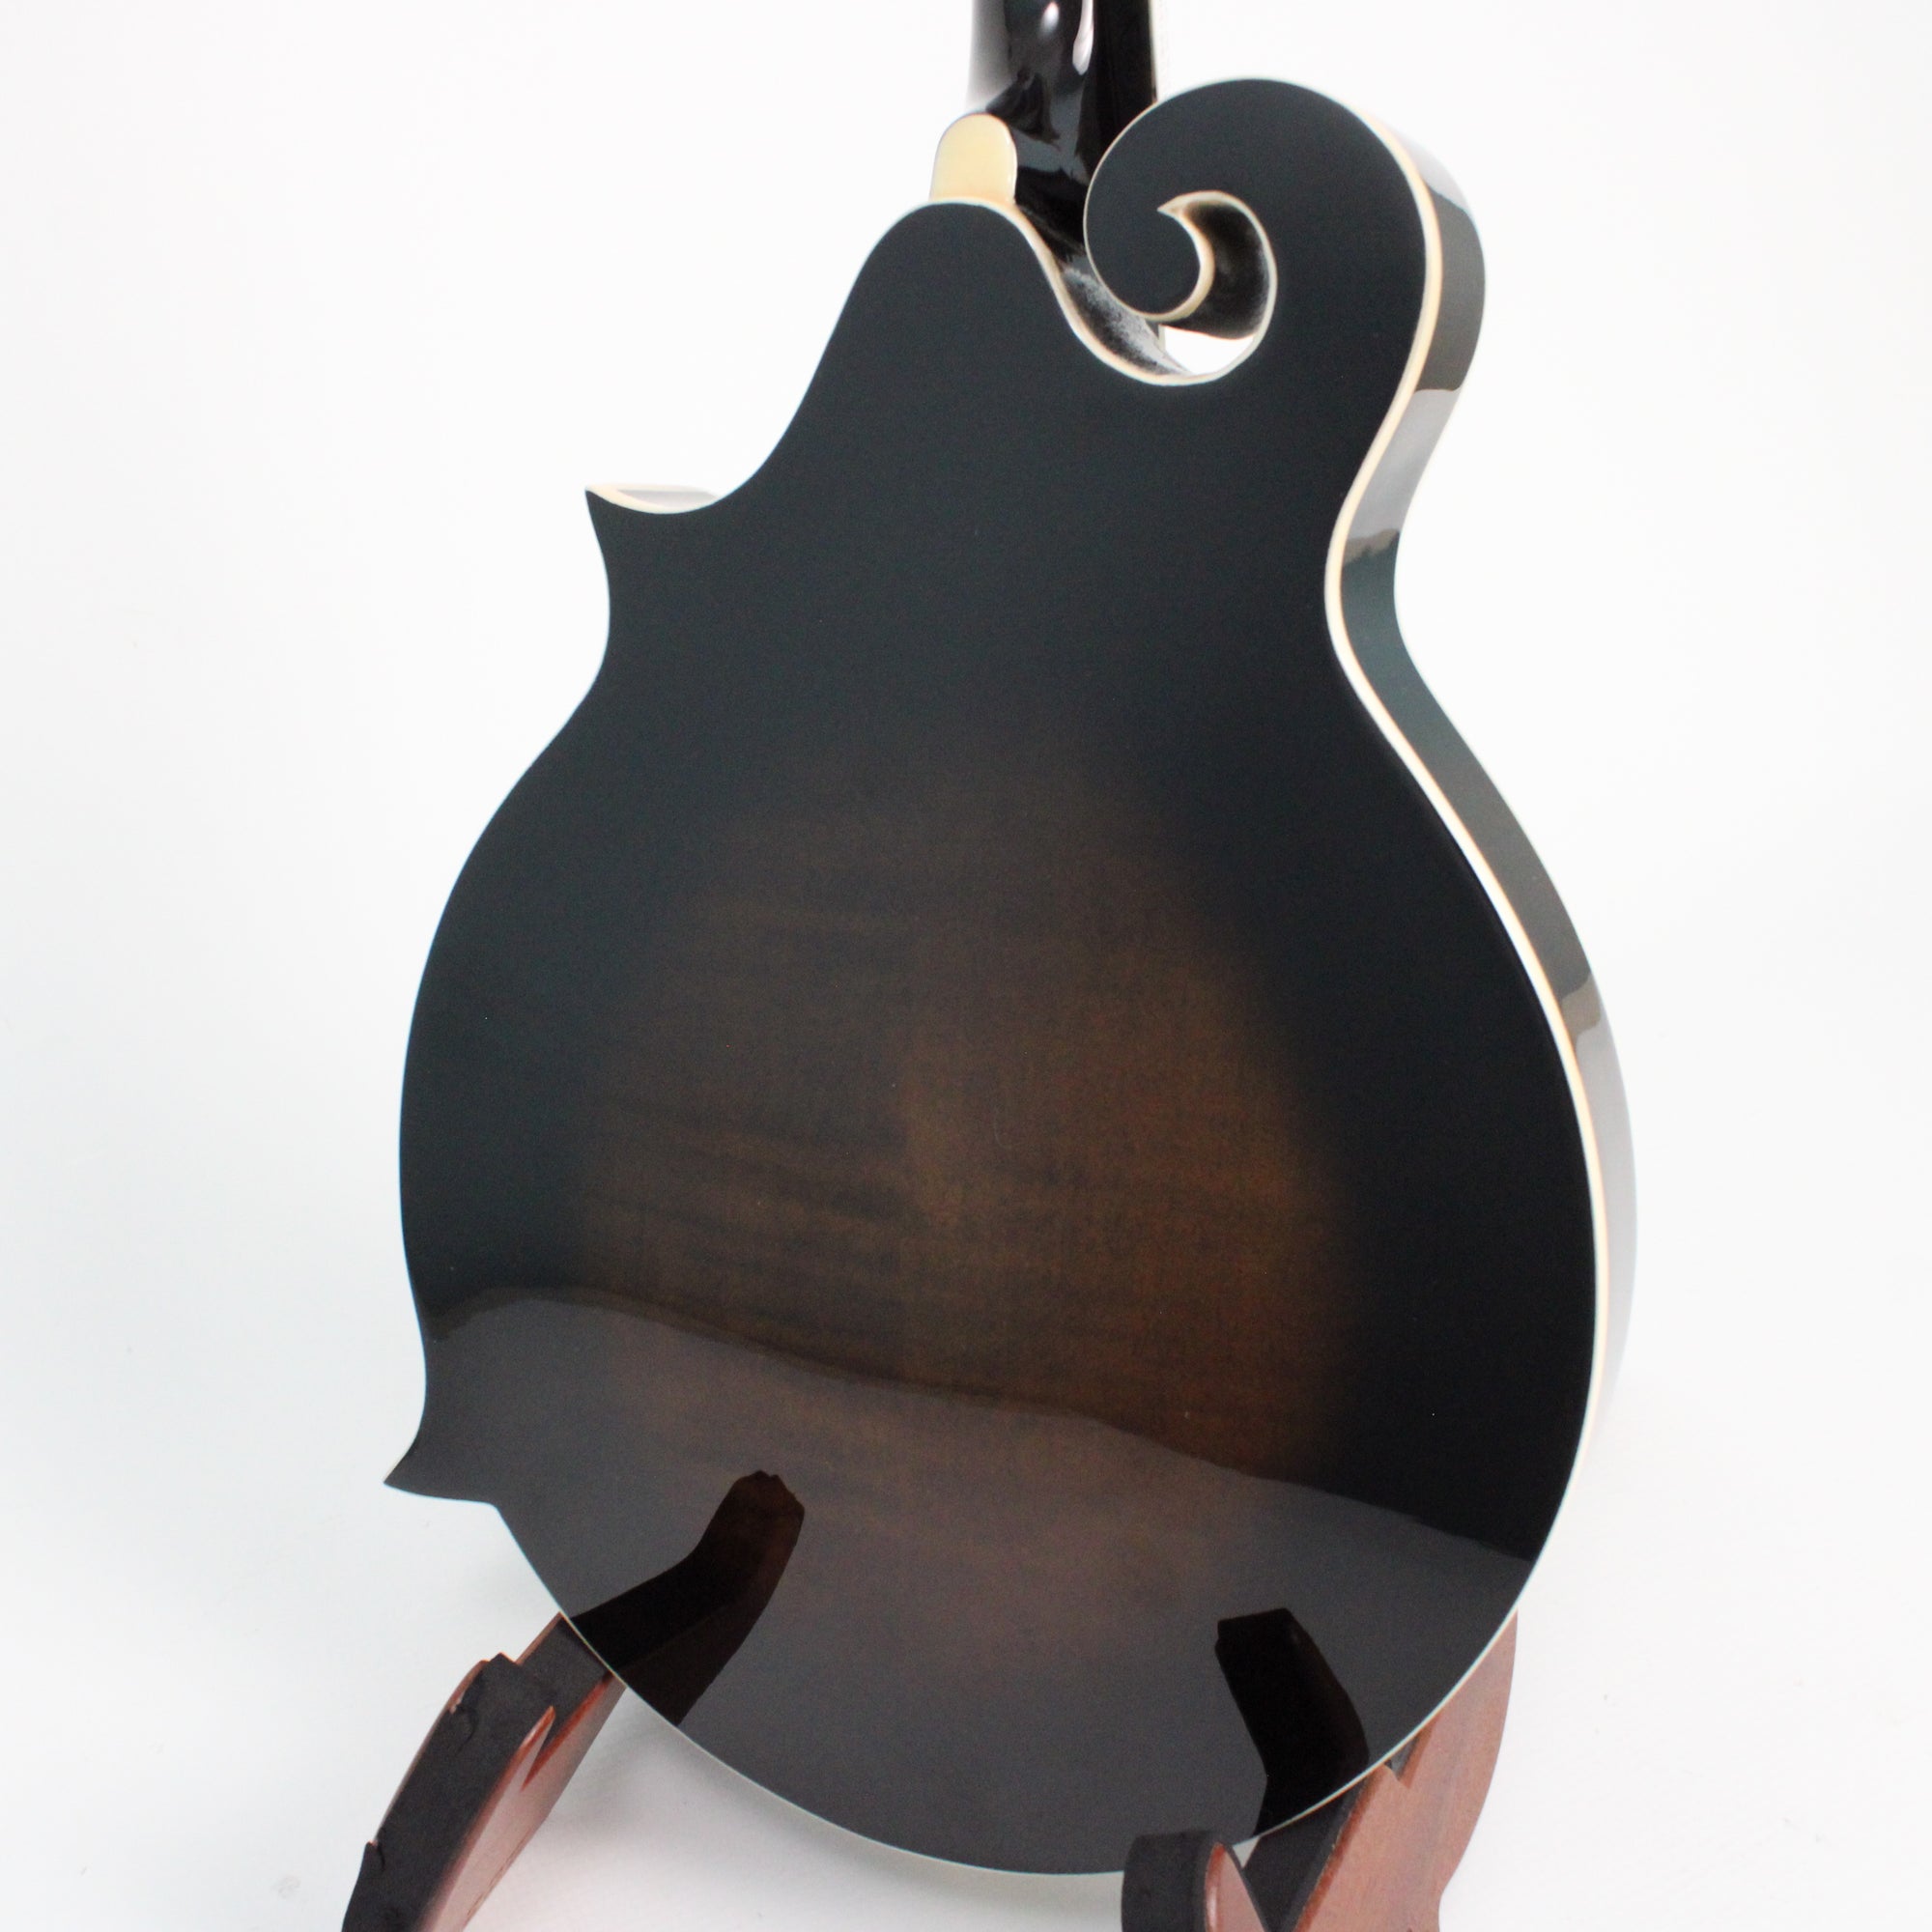 Ibanez M522SDVS F-Style Mandolin - Dark Violin Sunburst